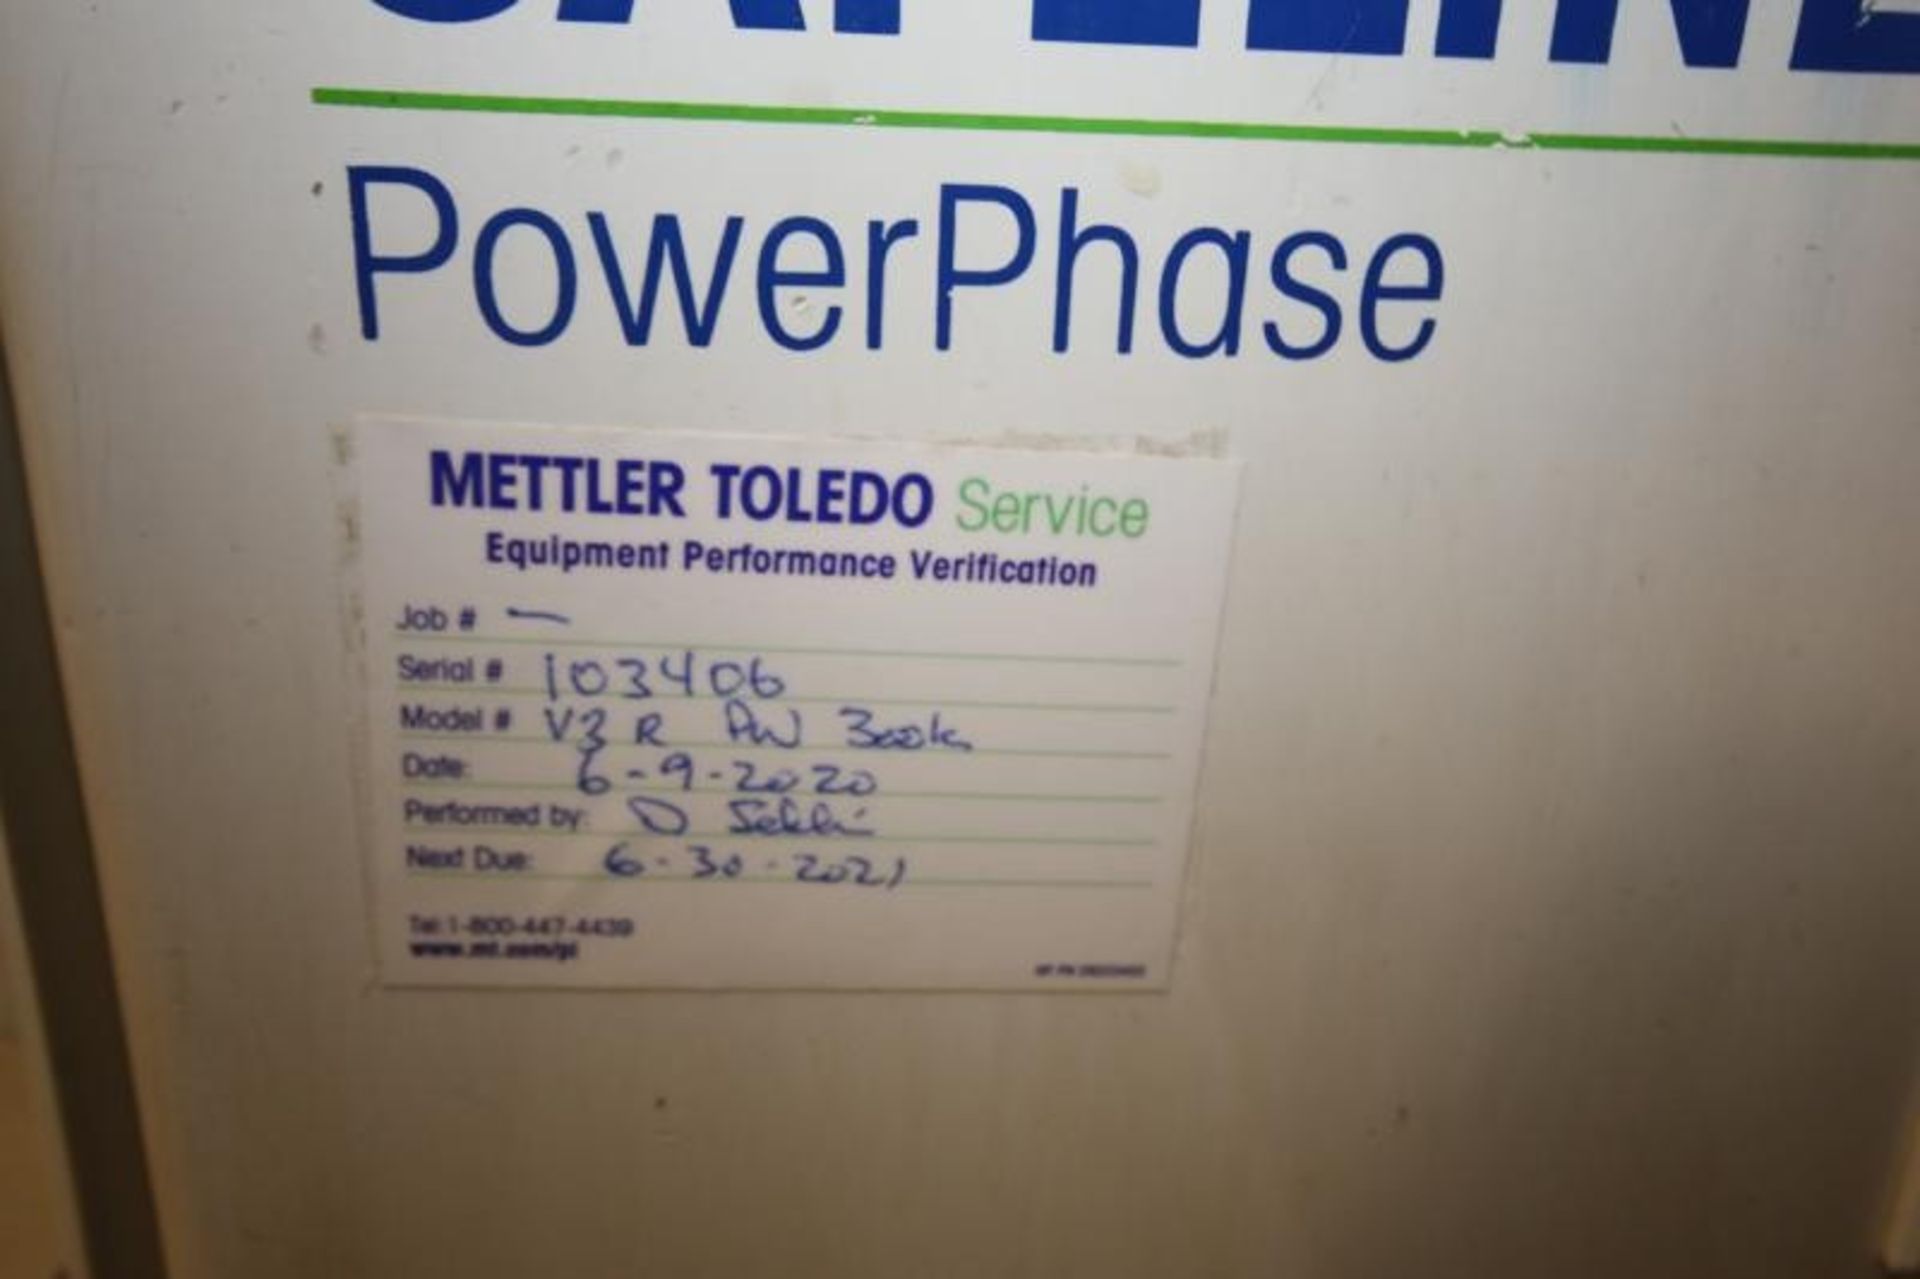 Mettler Toledo/Safeline Metal Detector, Type Power Phase, Model V3 R PW 300K, SN 103406, with 17' - Image 6 of 7